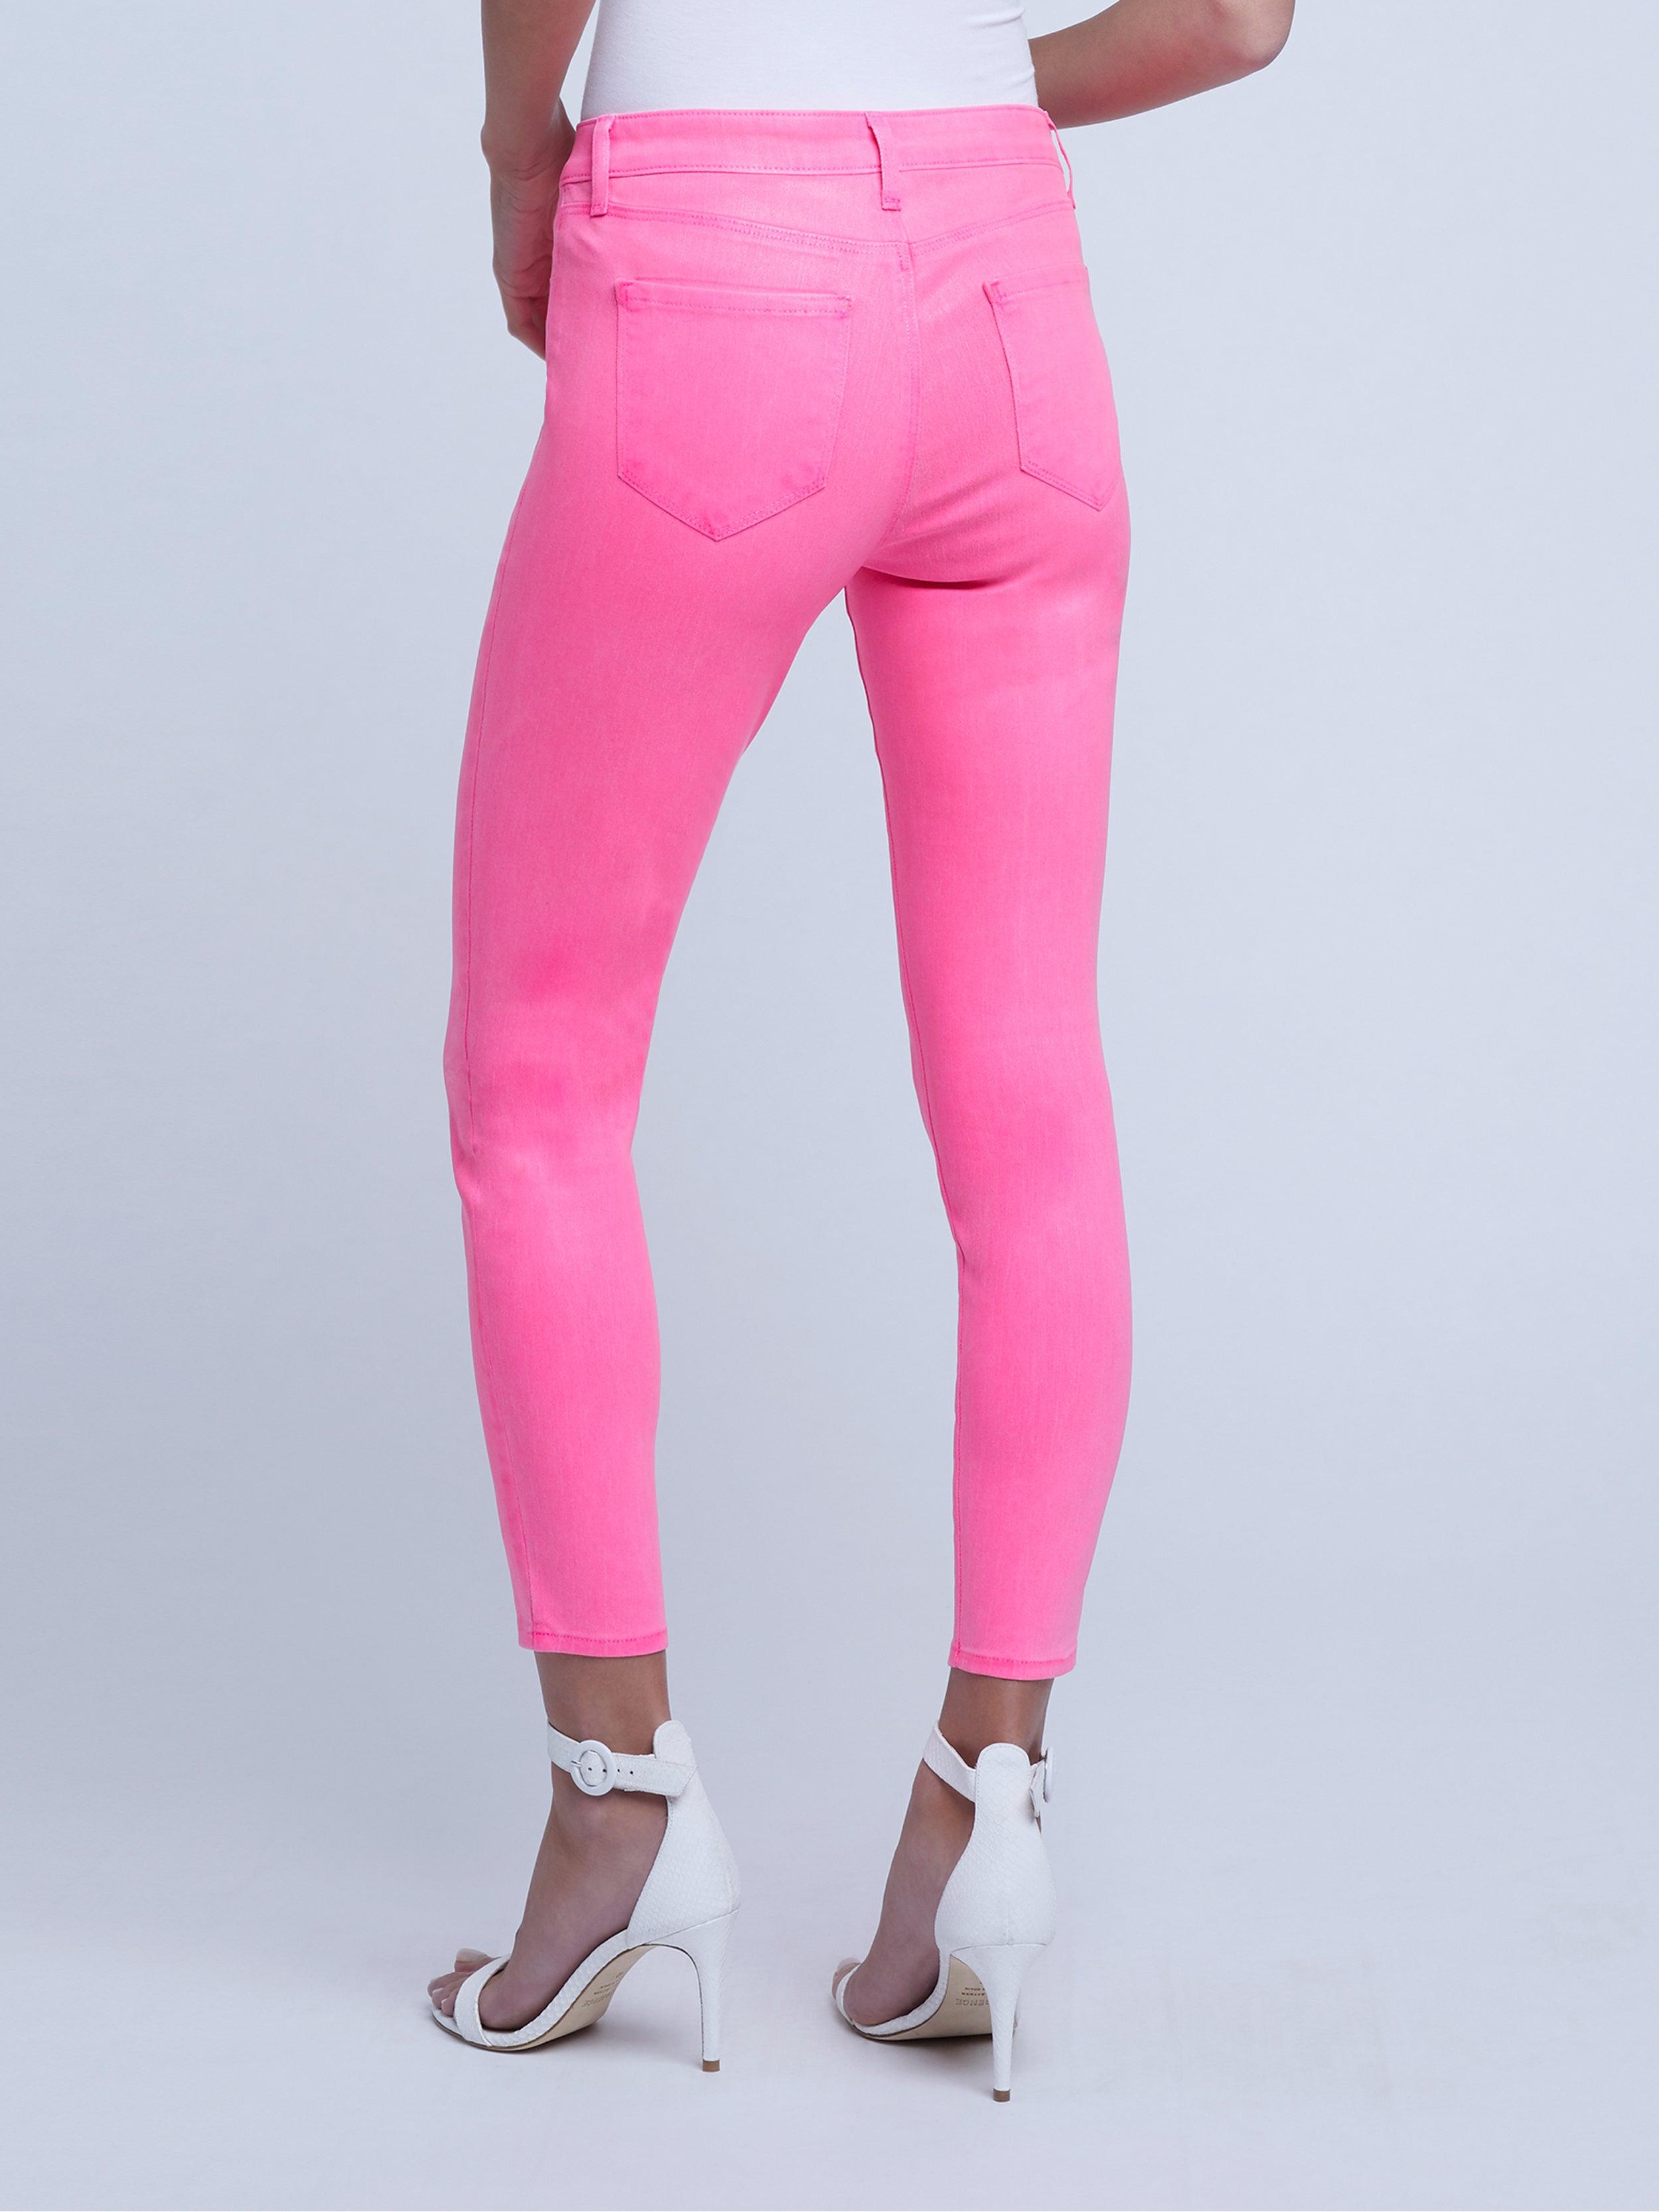 Jeans, Pink Custom Hand Painted Monogram Skinny Jeans